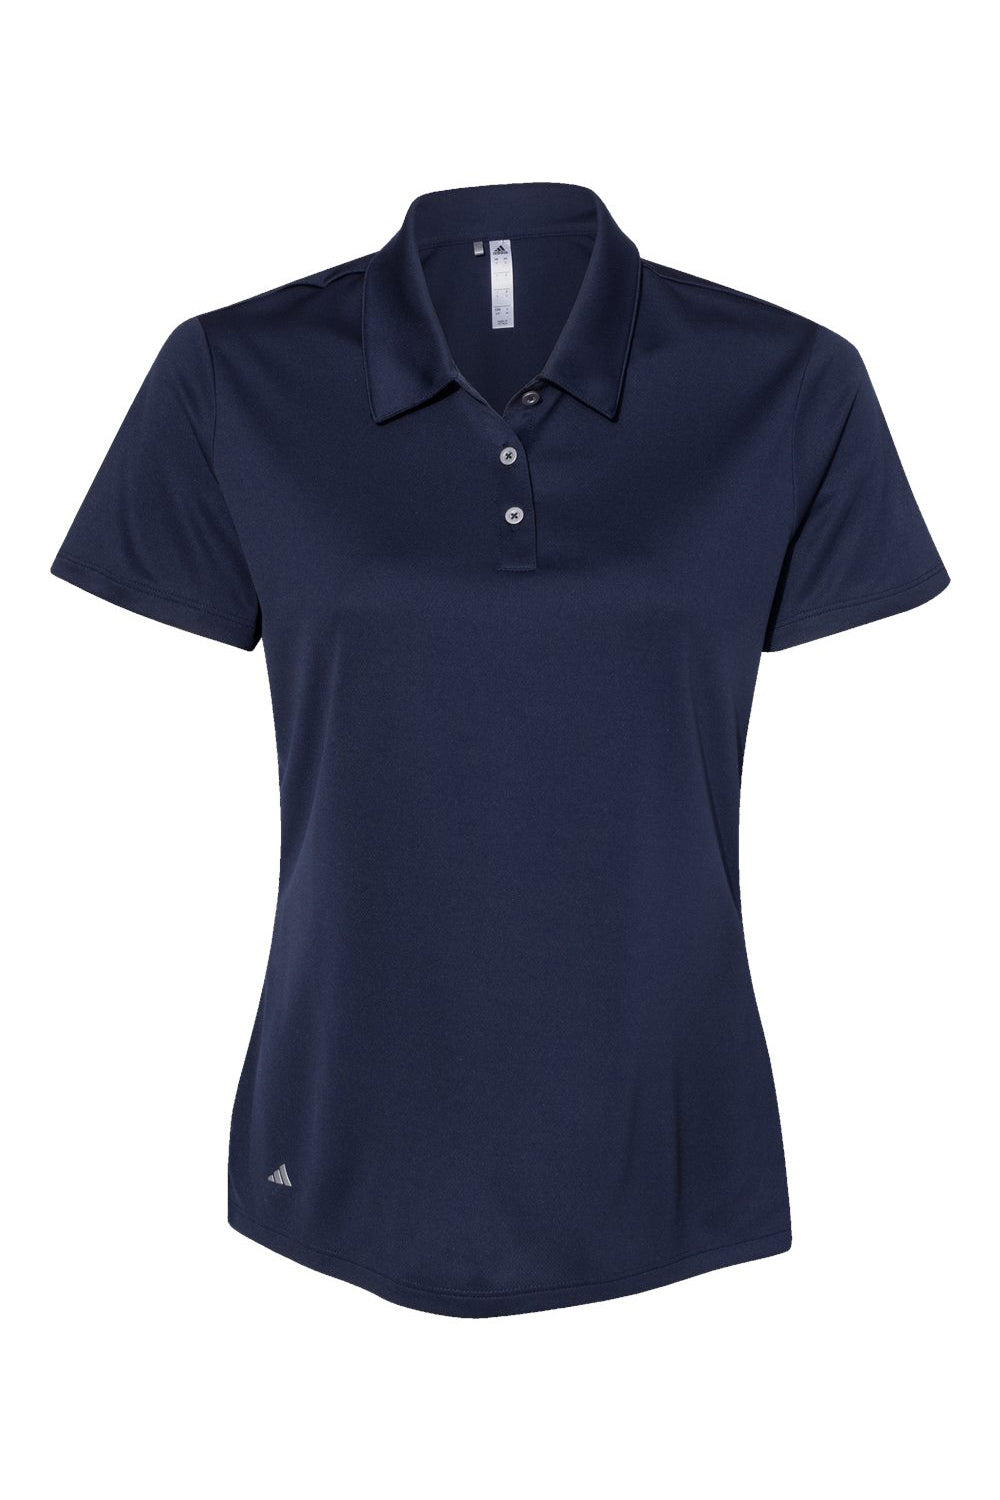 Adidas A231 Womens Performance Short Sleeve Polo Shirt Navy Blue Flat Front